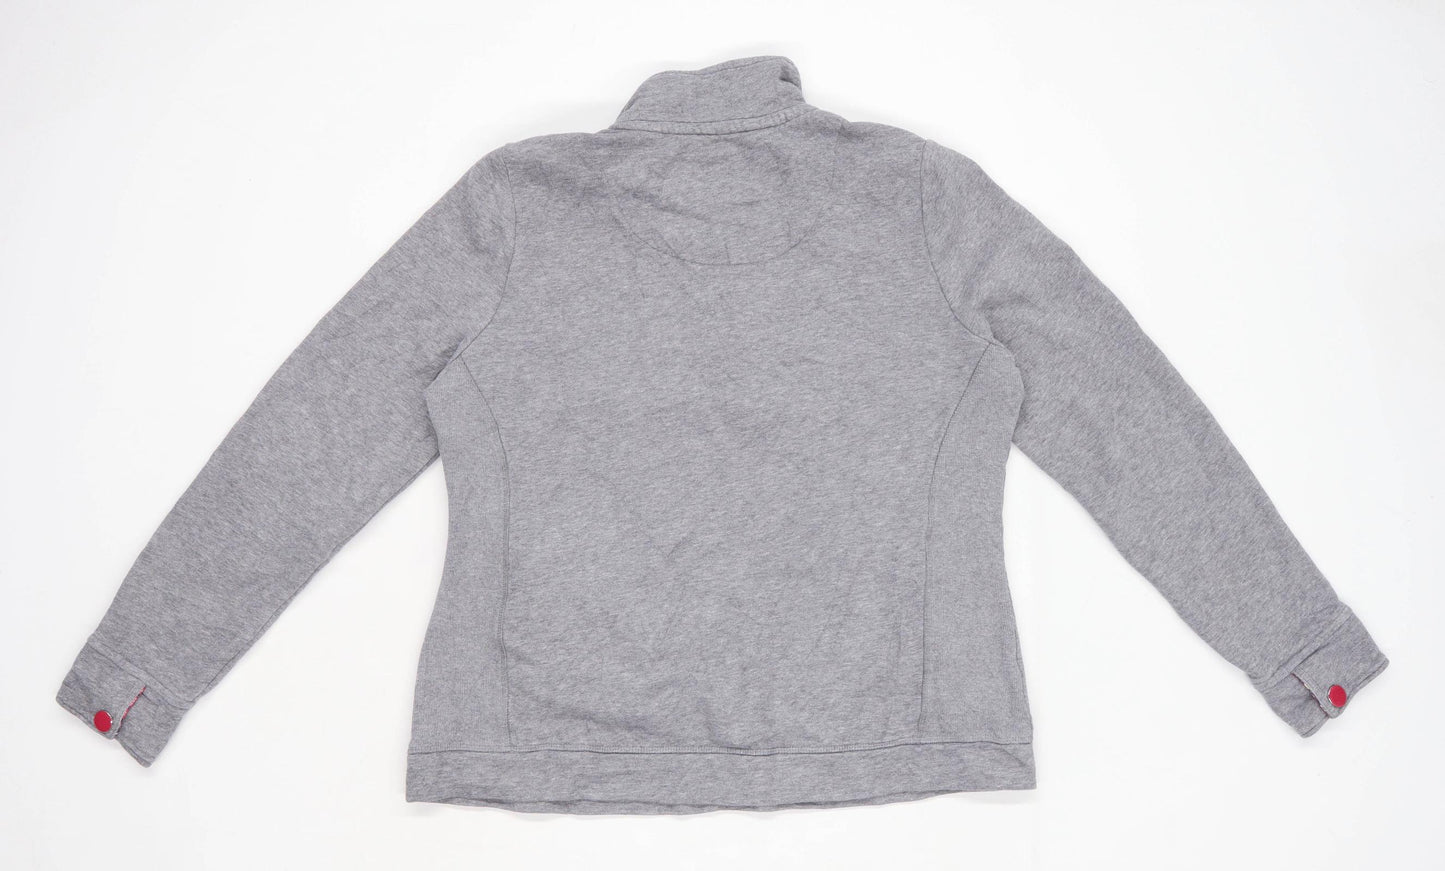 TU Womens Size 16 Cotton Blend Grey Sweatshirt (Regular)